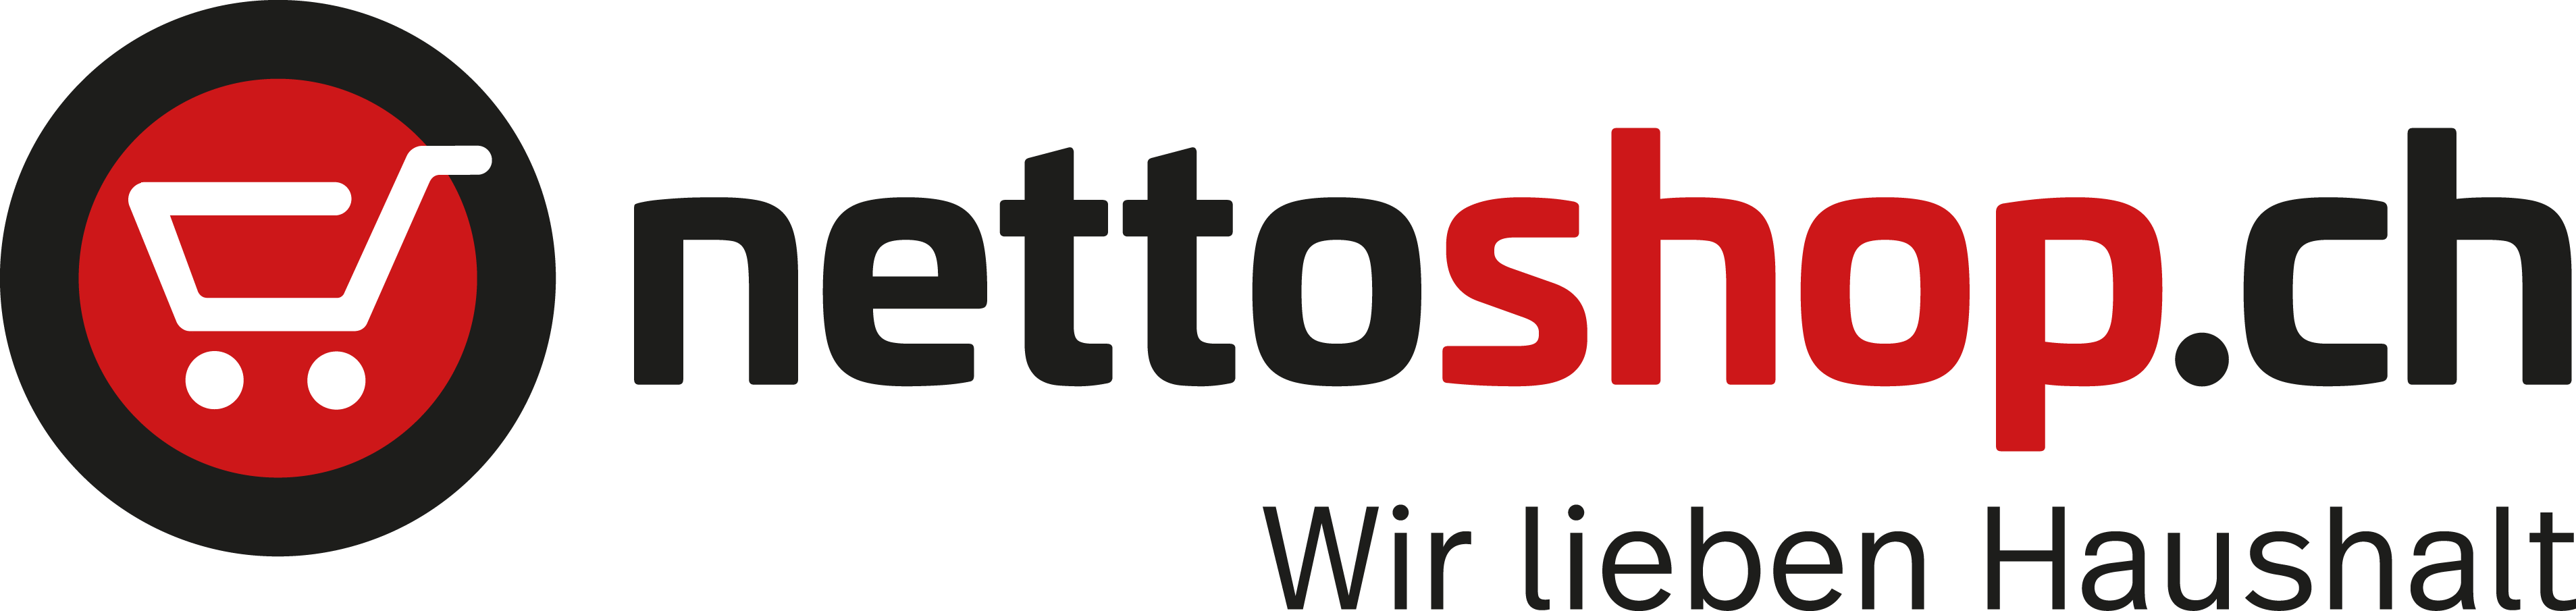 nettoshop Logo